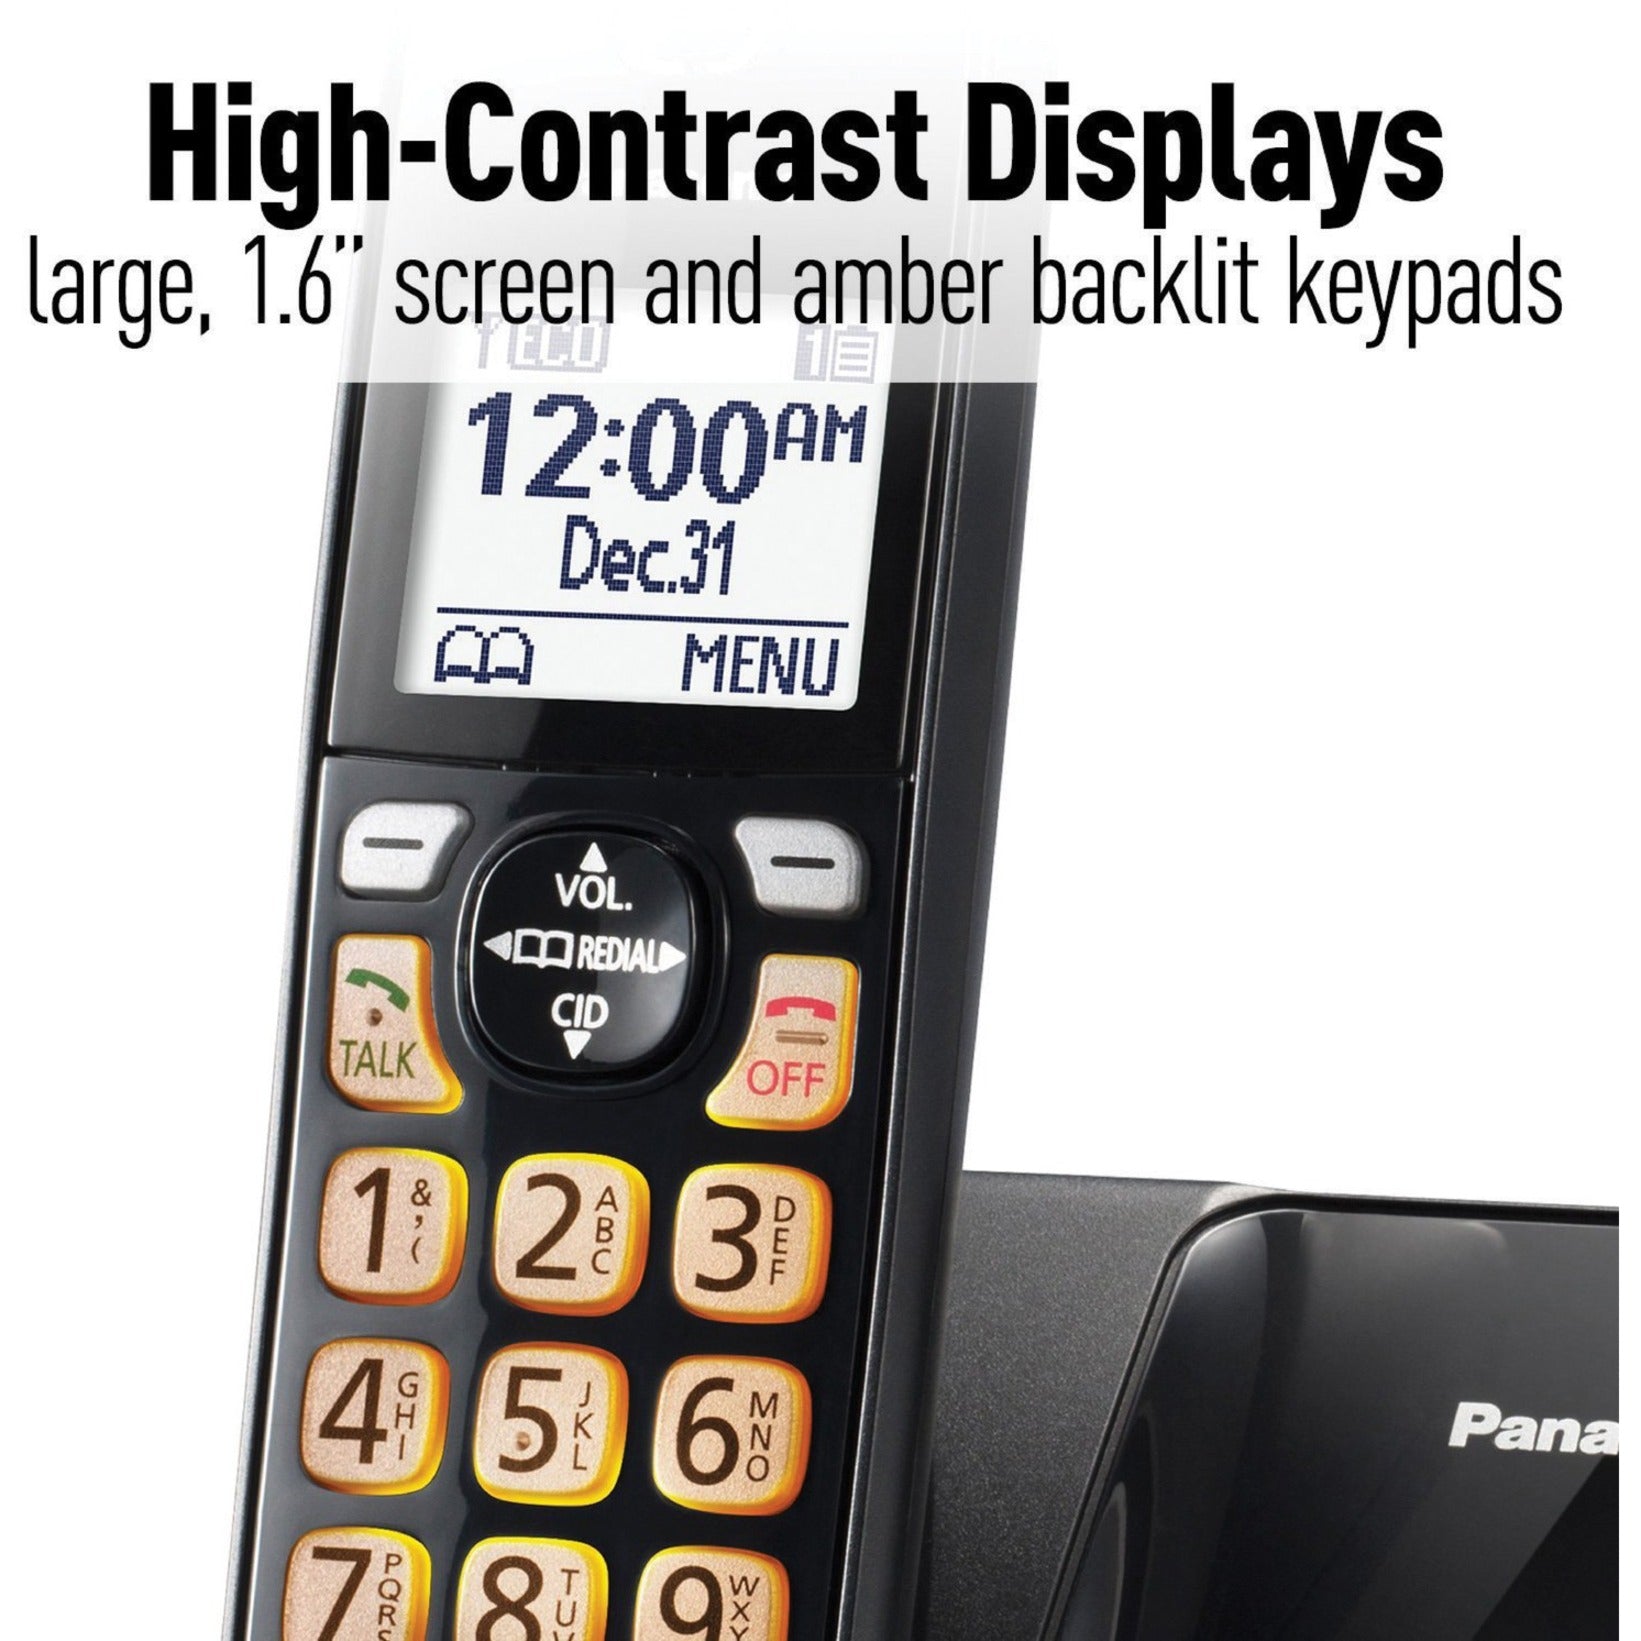 Panasonic KX-TGD510B DECT 6.0 Cordless Phone - Black, Expandable with Call Block, 1 Handset